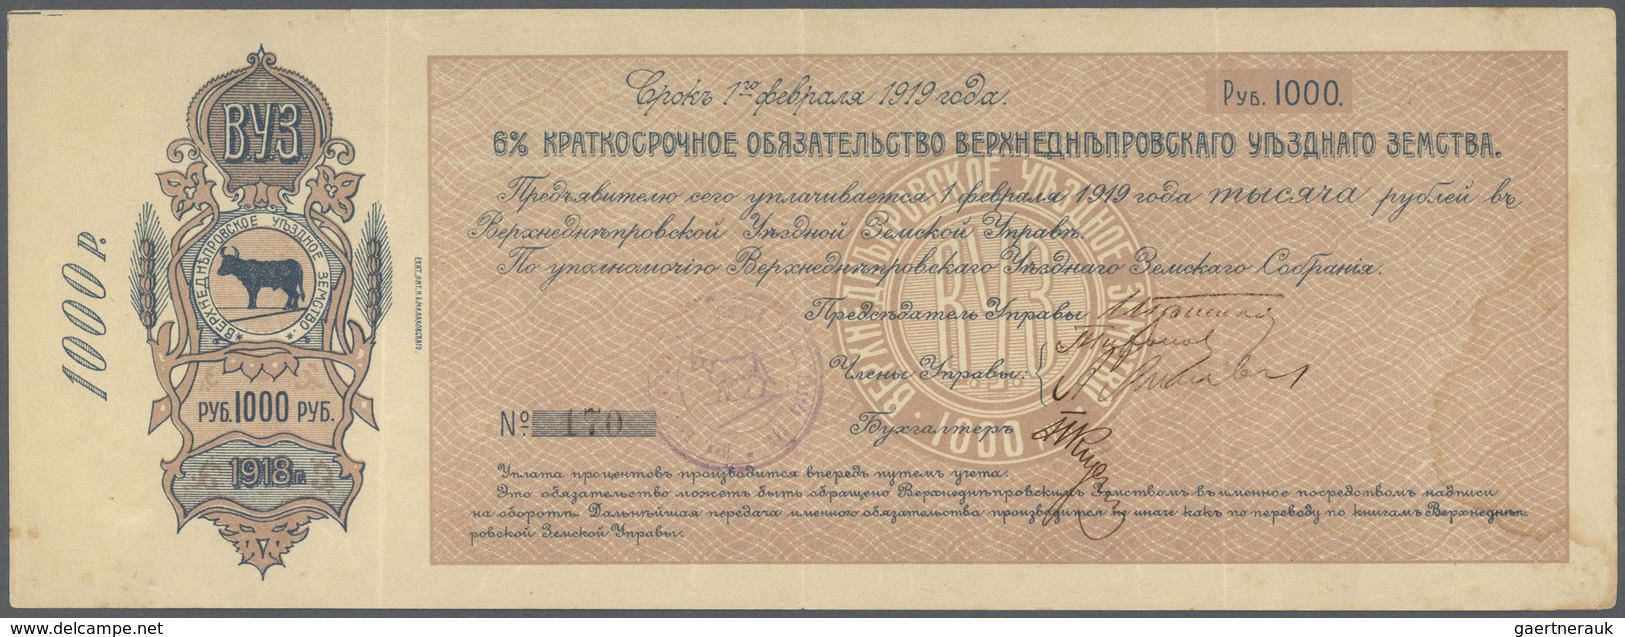 Ukraina / Ukraine: Verhnedniprovske County Council (Верхнеднпровское  Уздное  Земствo), 1000 Rubles - Ucrania